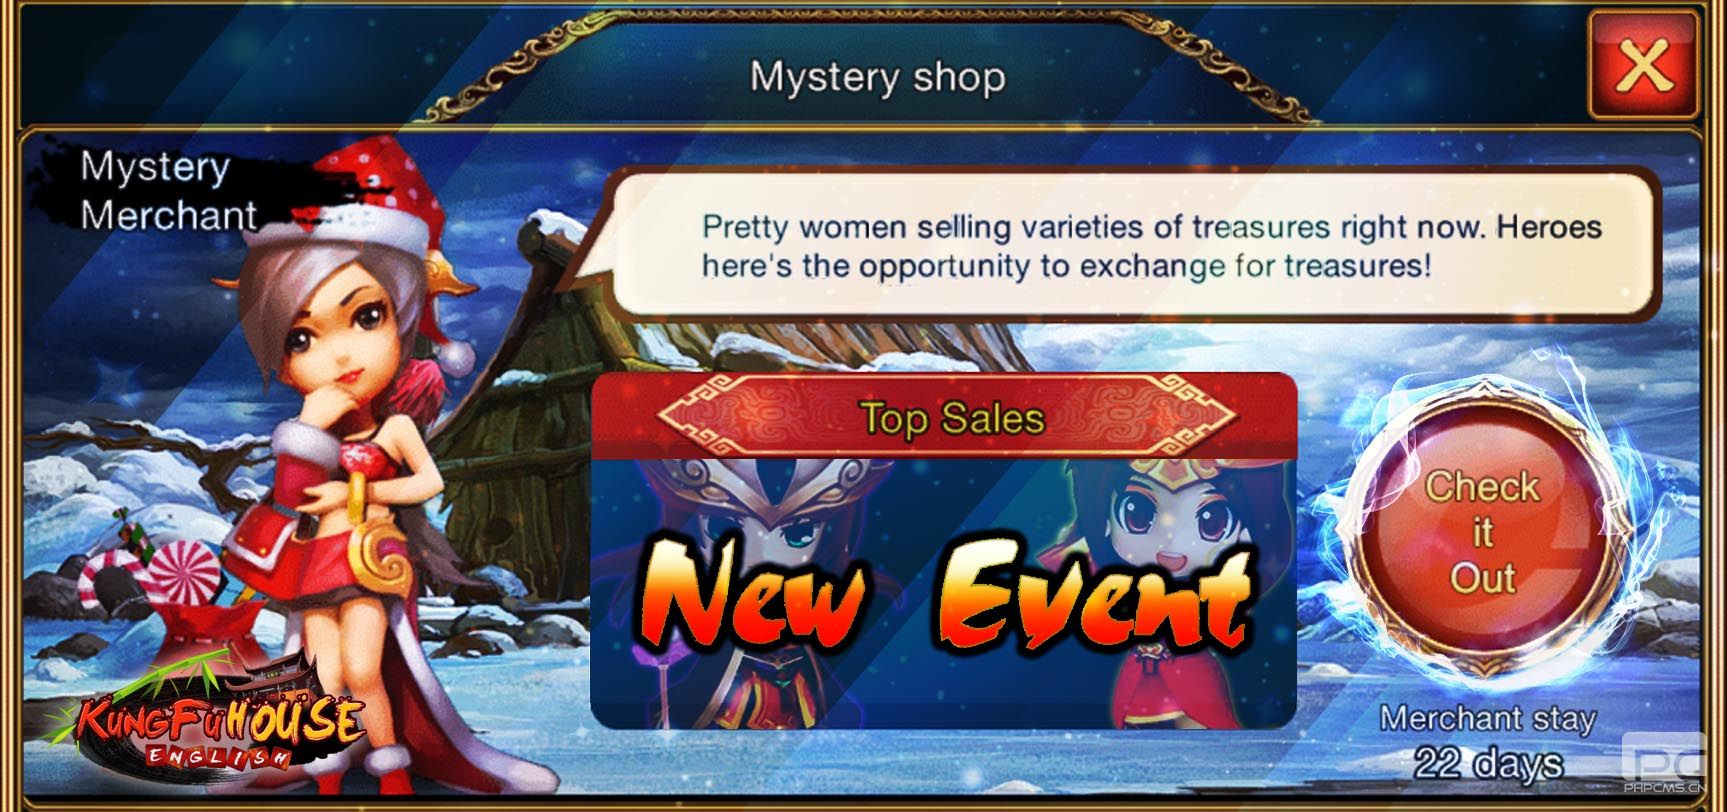 Mystery Merchant is back on Valentine's Week!